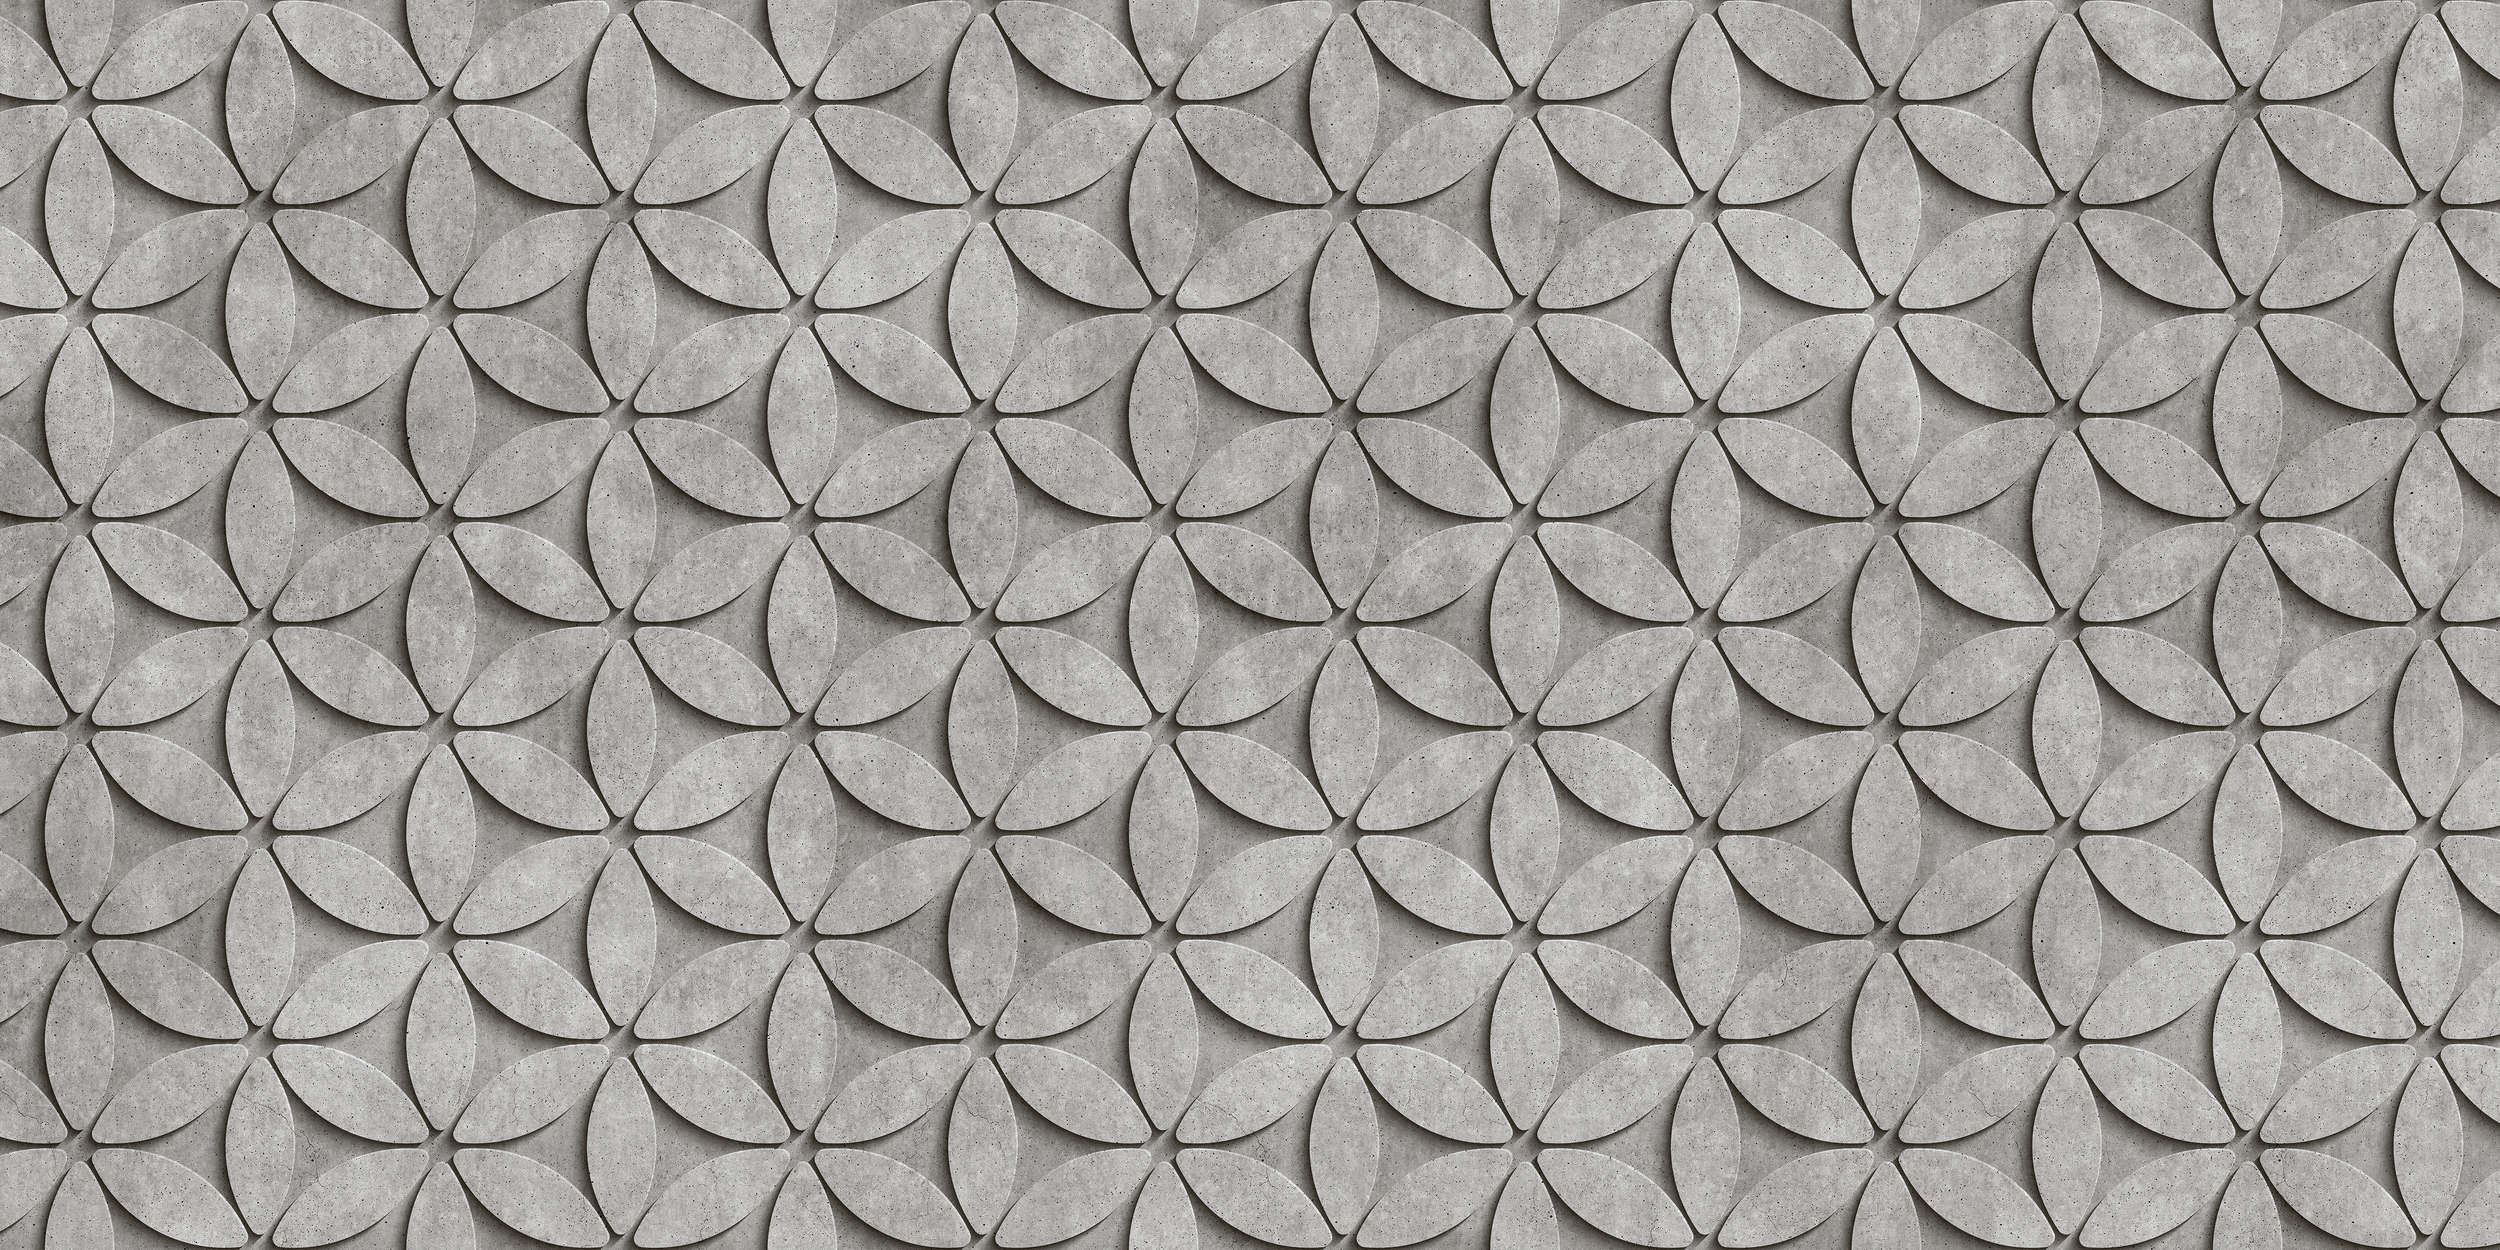             Tile 1 - Fototapete in Cooler 3D Beton-Polygone – Grau, Schwarz | Perlmutt Glattvlies
        